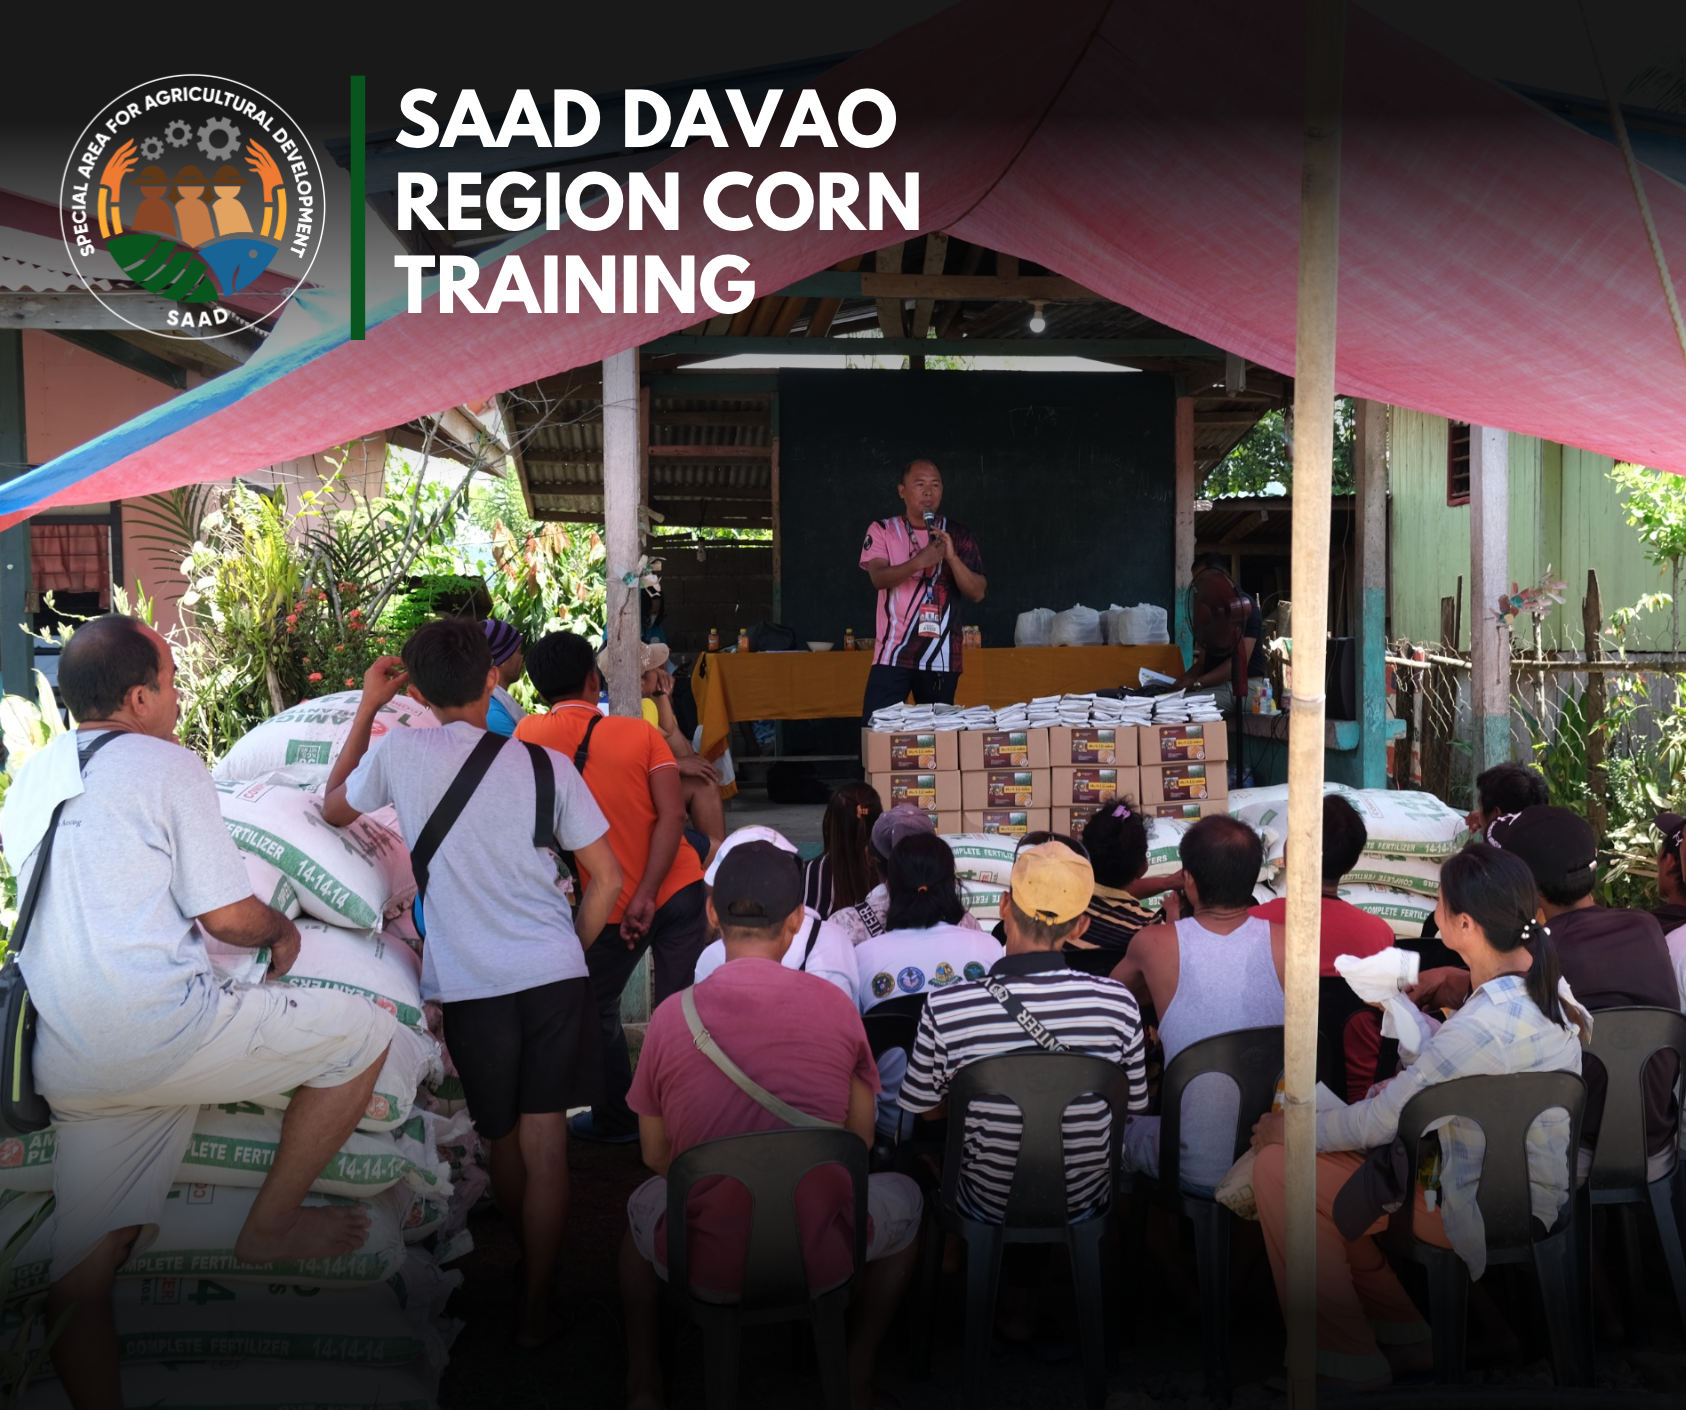 300 SAAD Davao farmers underwent training for corn production